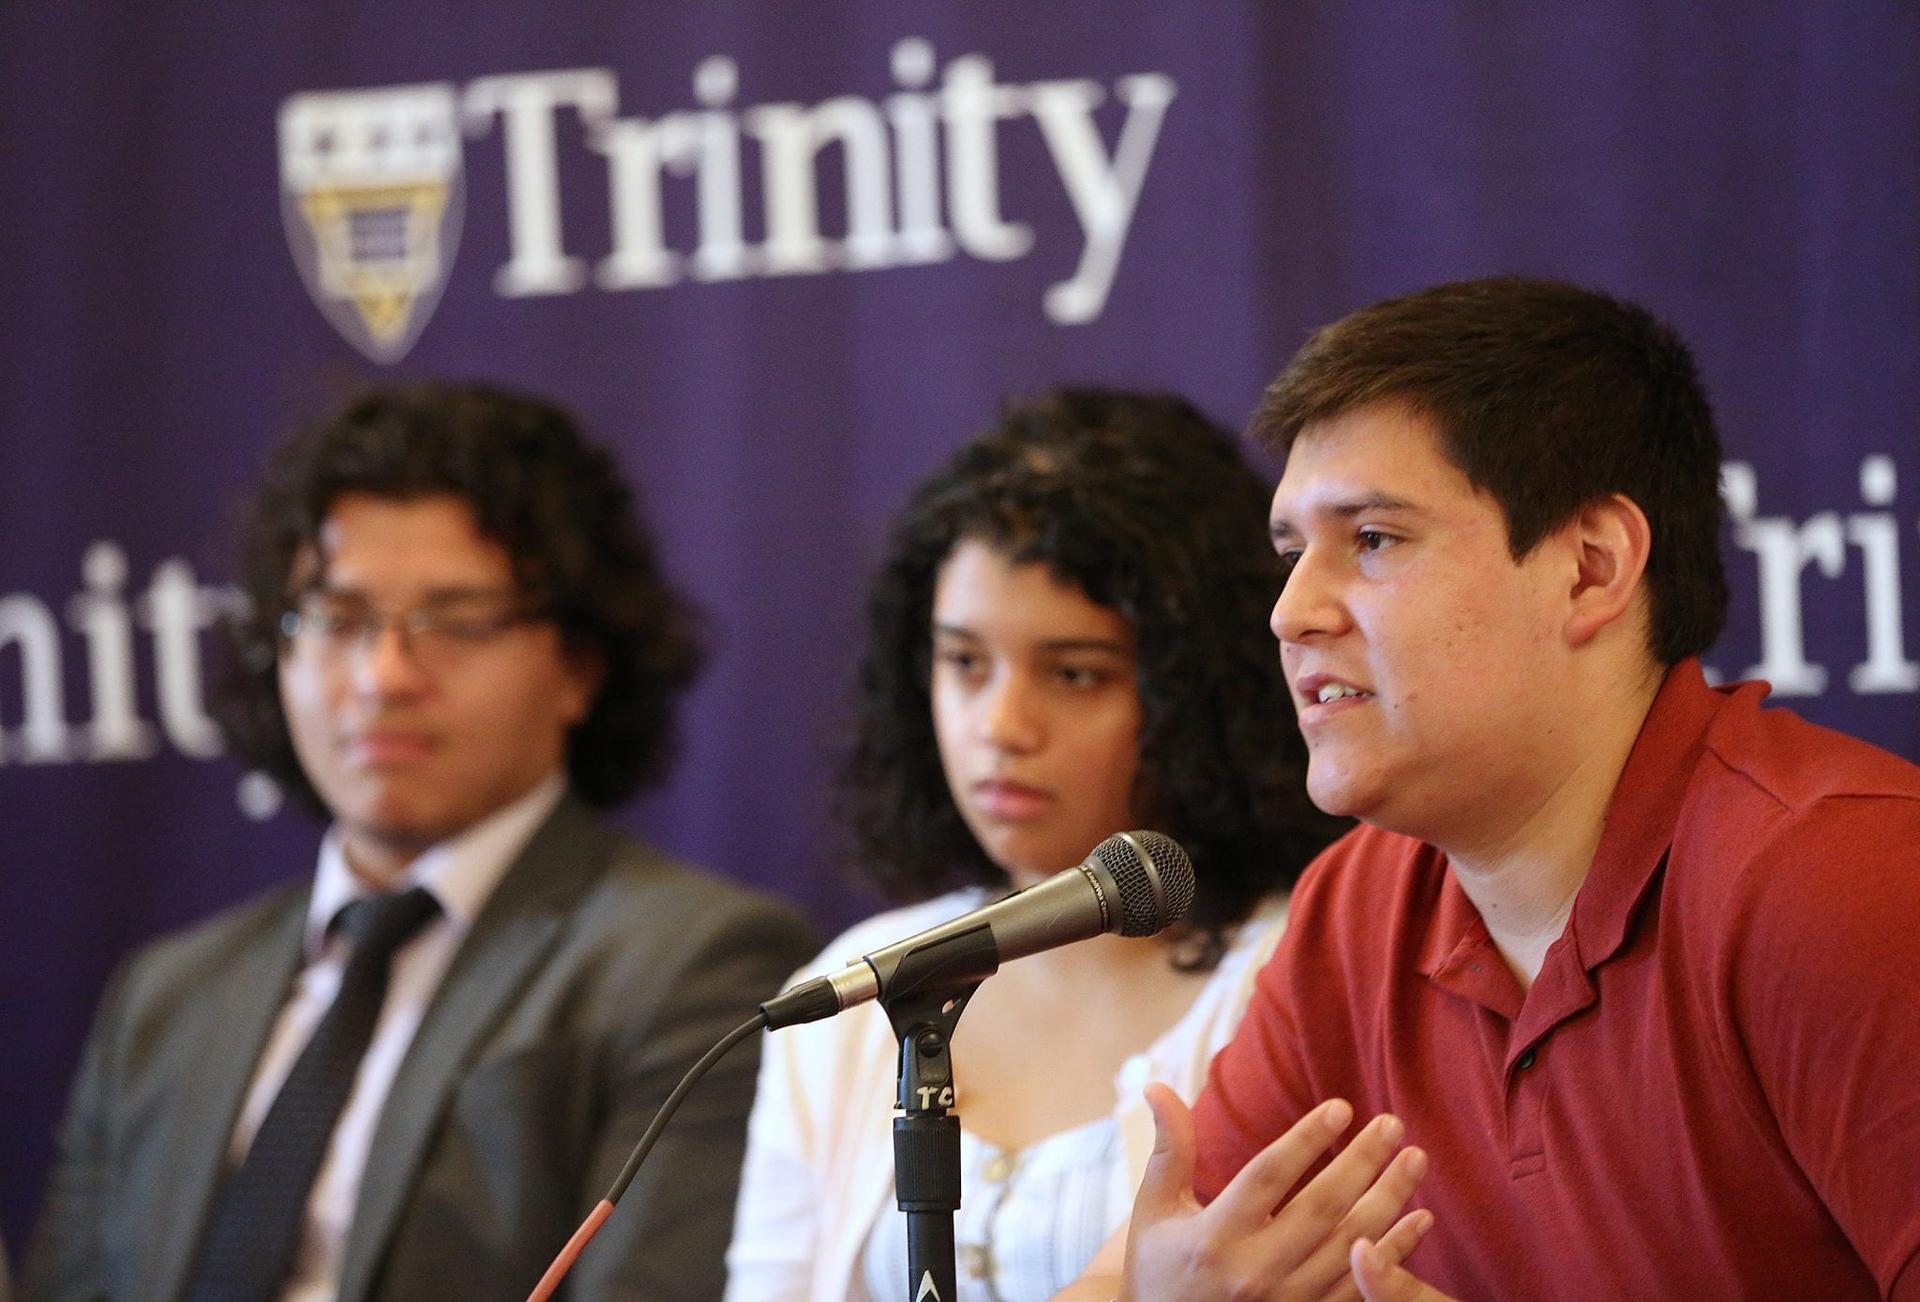 Immigrant college students describe uncertain road ahead